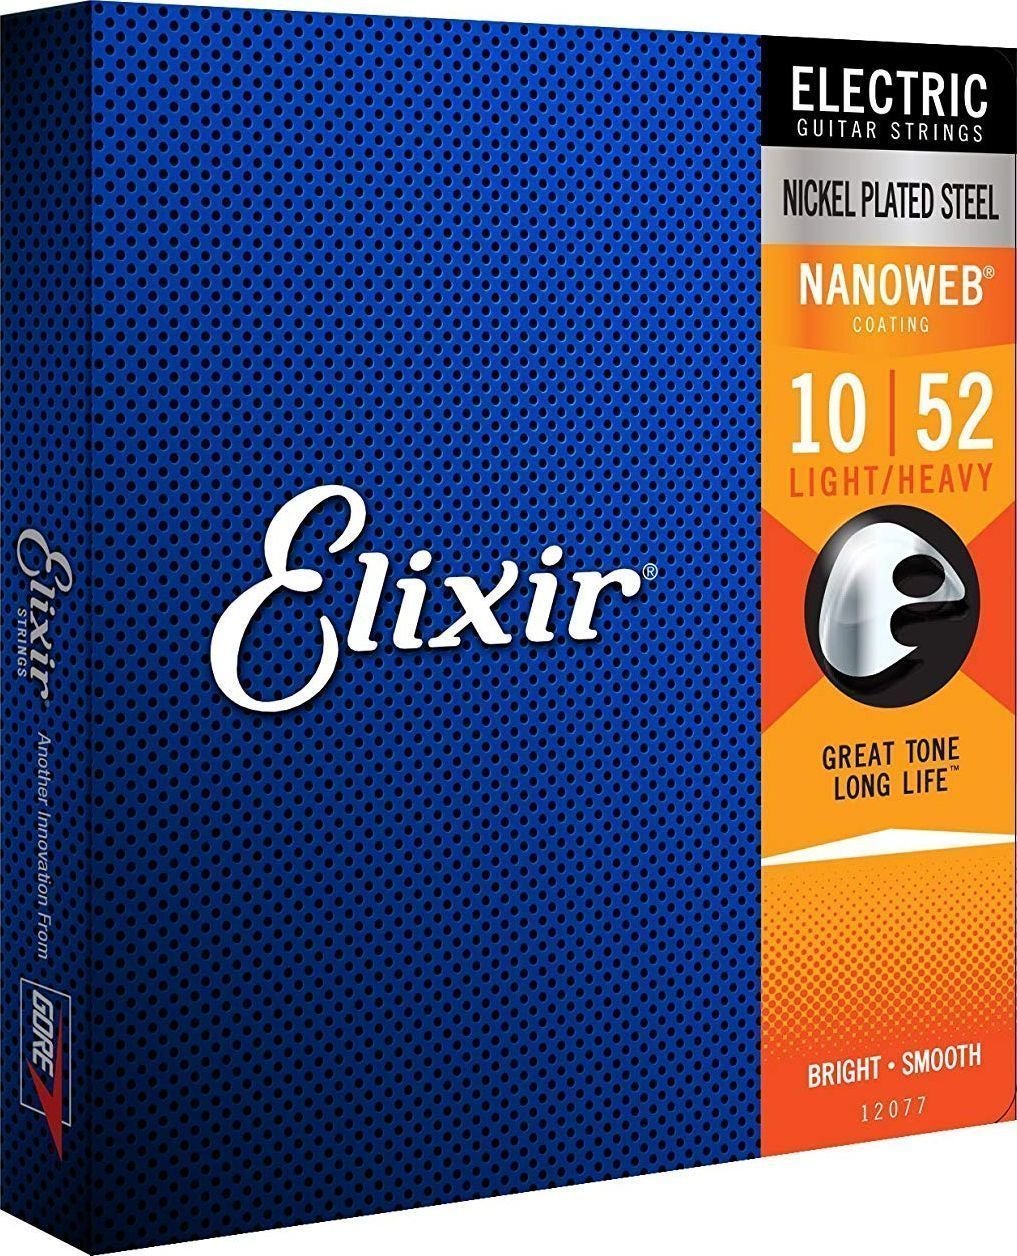 Žice za električnu gitaru Elixir 12077 Nanoweb 10-52